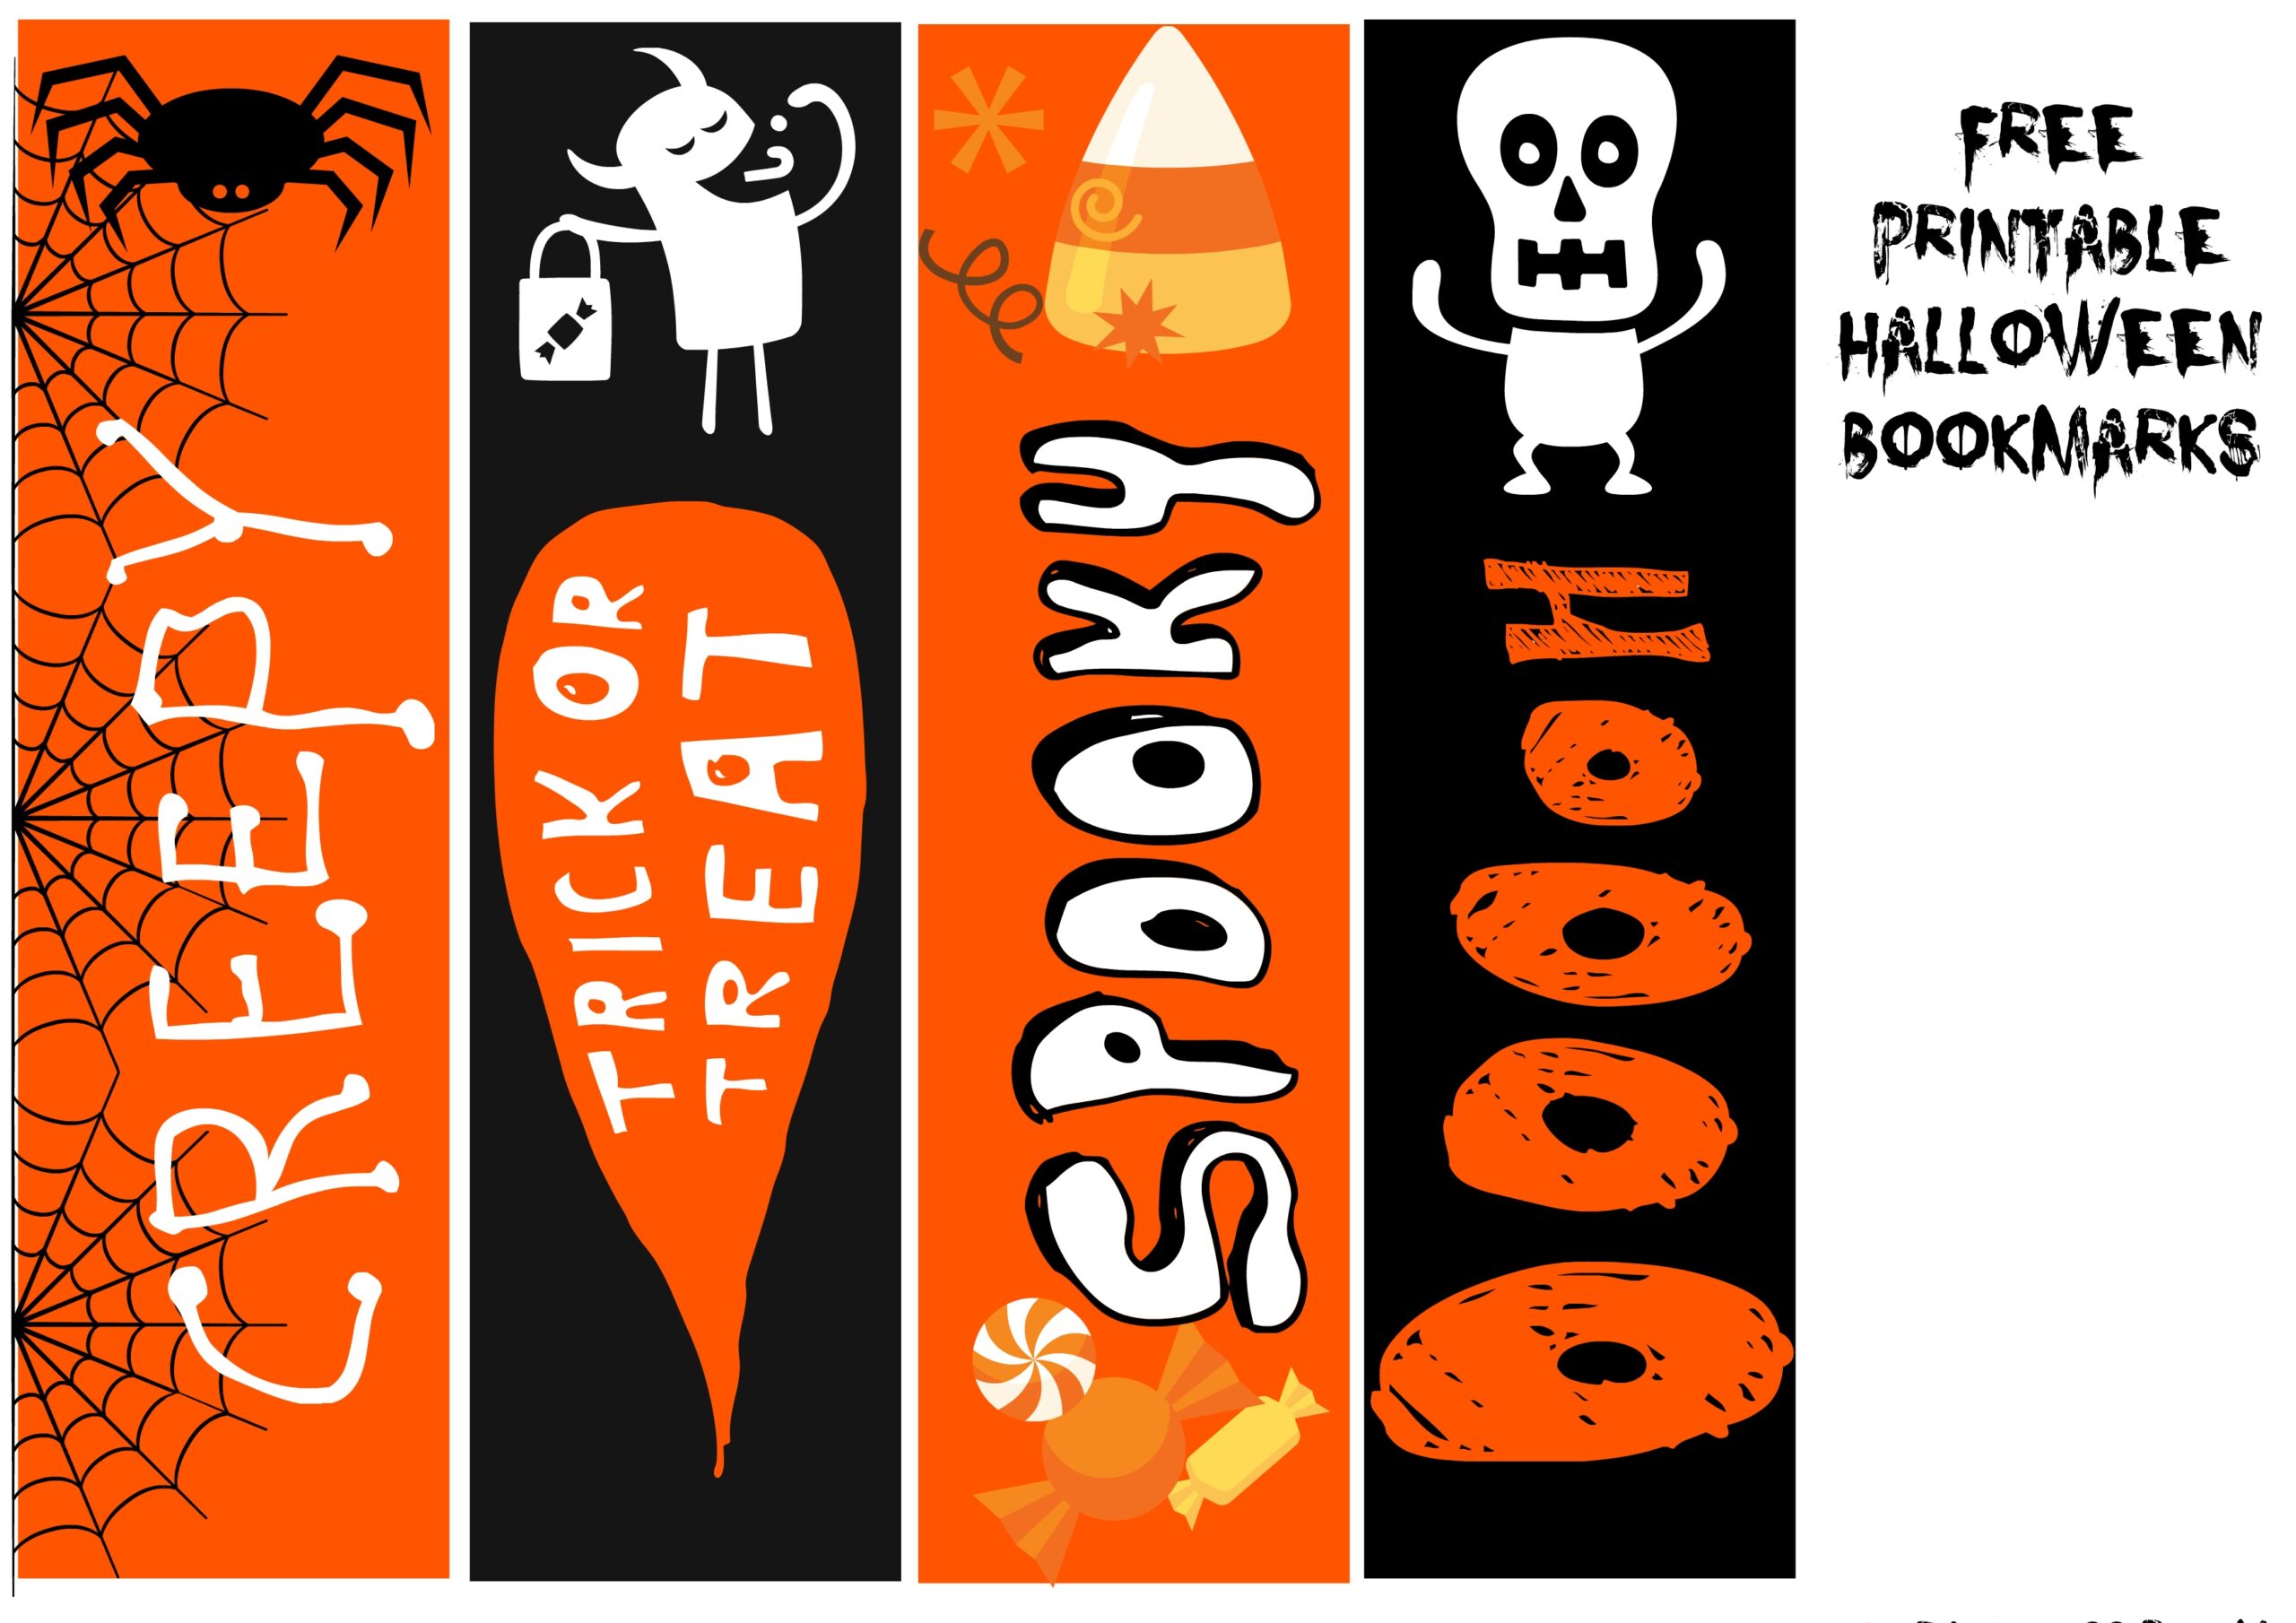 Printable Halloween Bookmarks Free